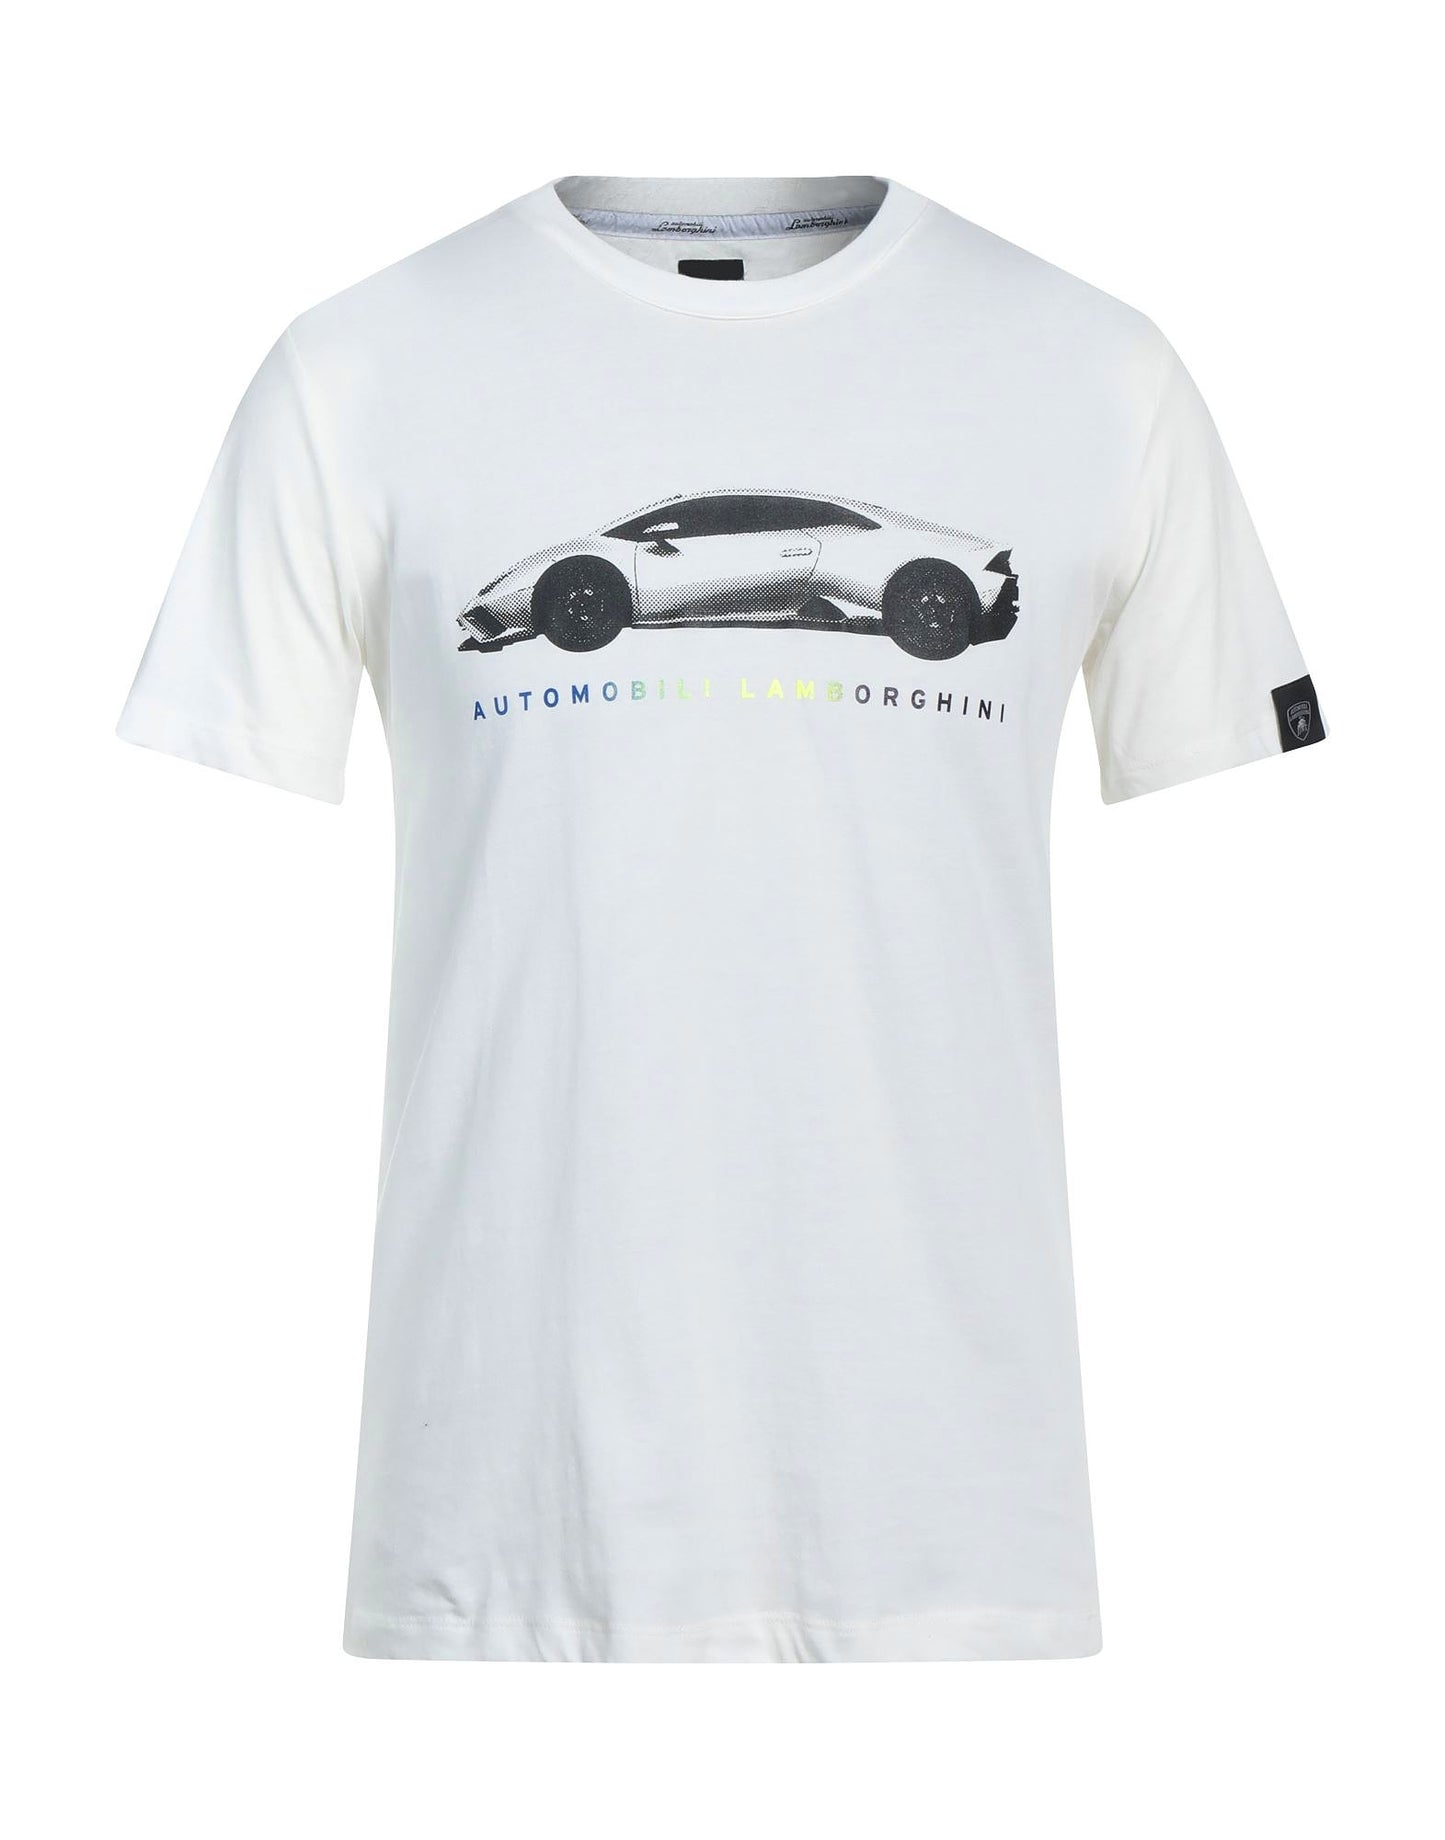 Automobili Lamborghini Huracan Evo RWD T-Shirt - White